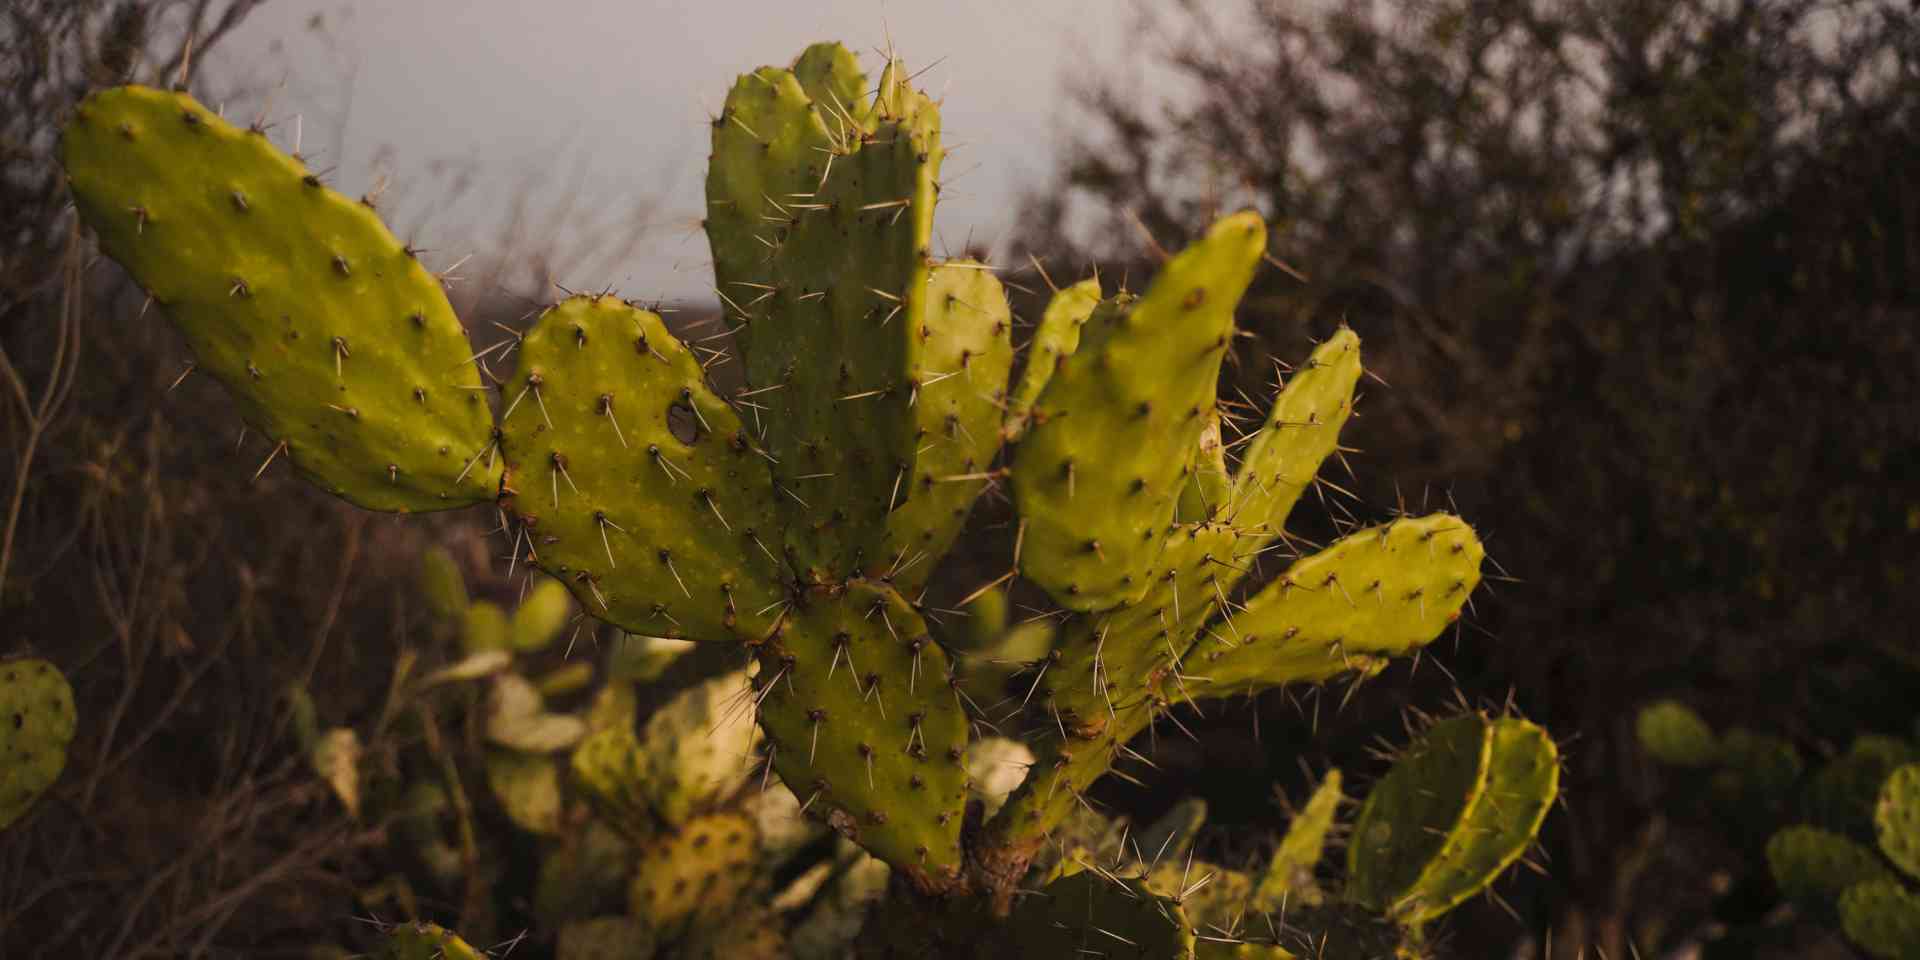 Nopal Cactus a Key Component in Land Reclamation - diego-lozano-Xobsjrz0J78-unsplash